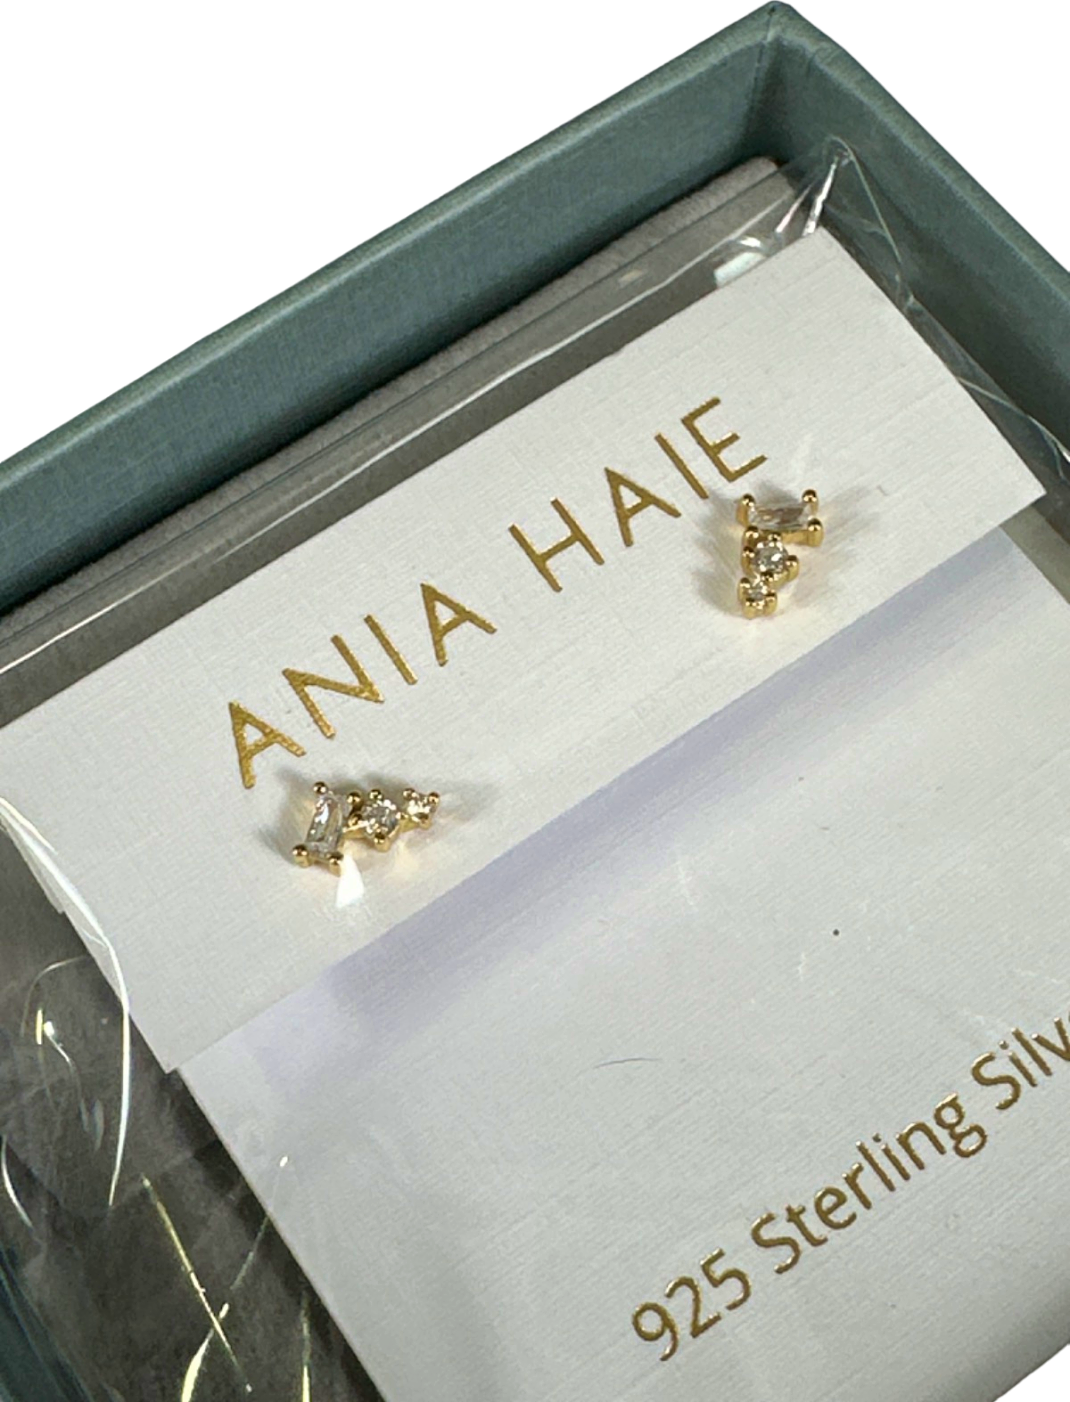 ANIA HAIE Glam Mini Climber Gold Stud Earrings - Gift Boxed